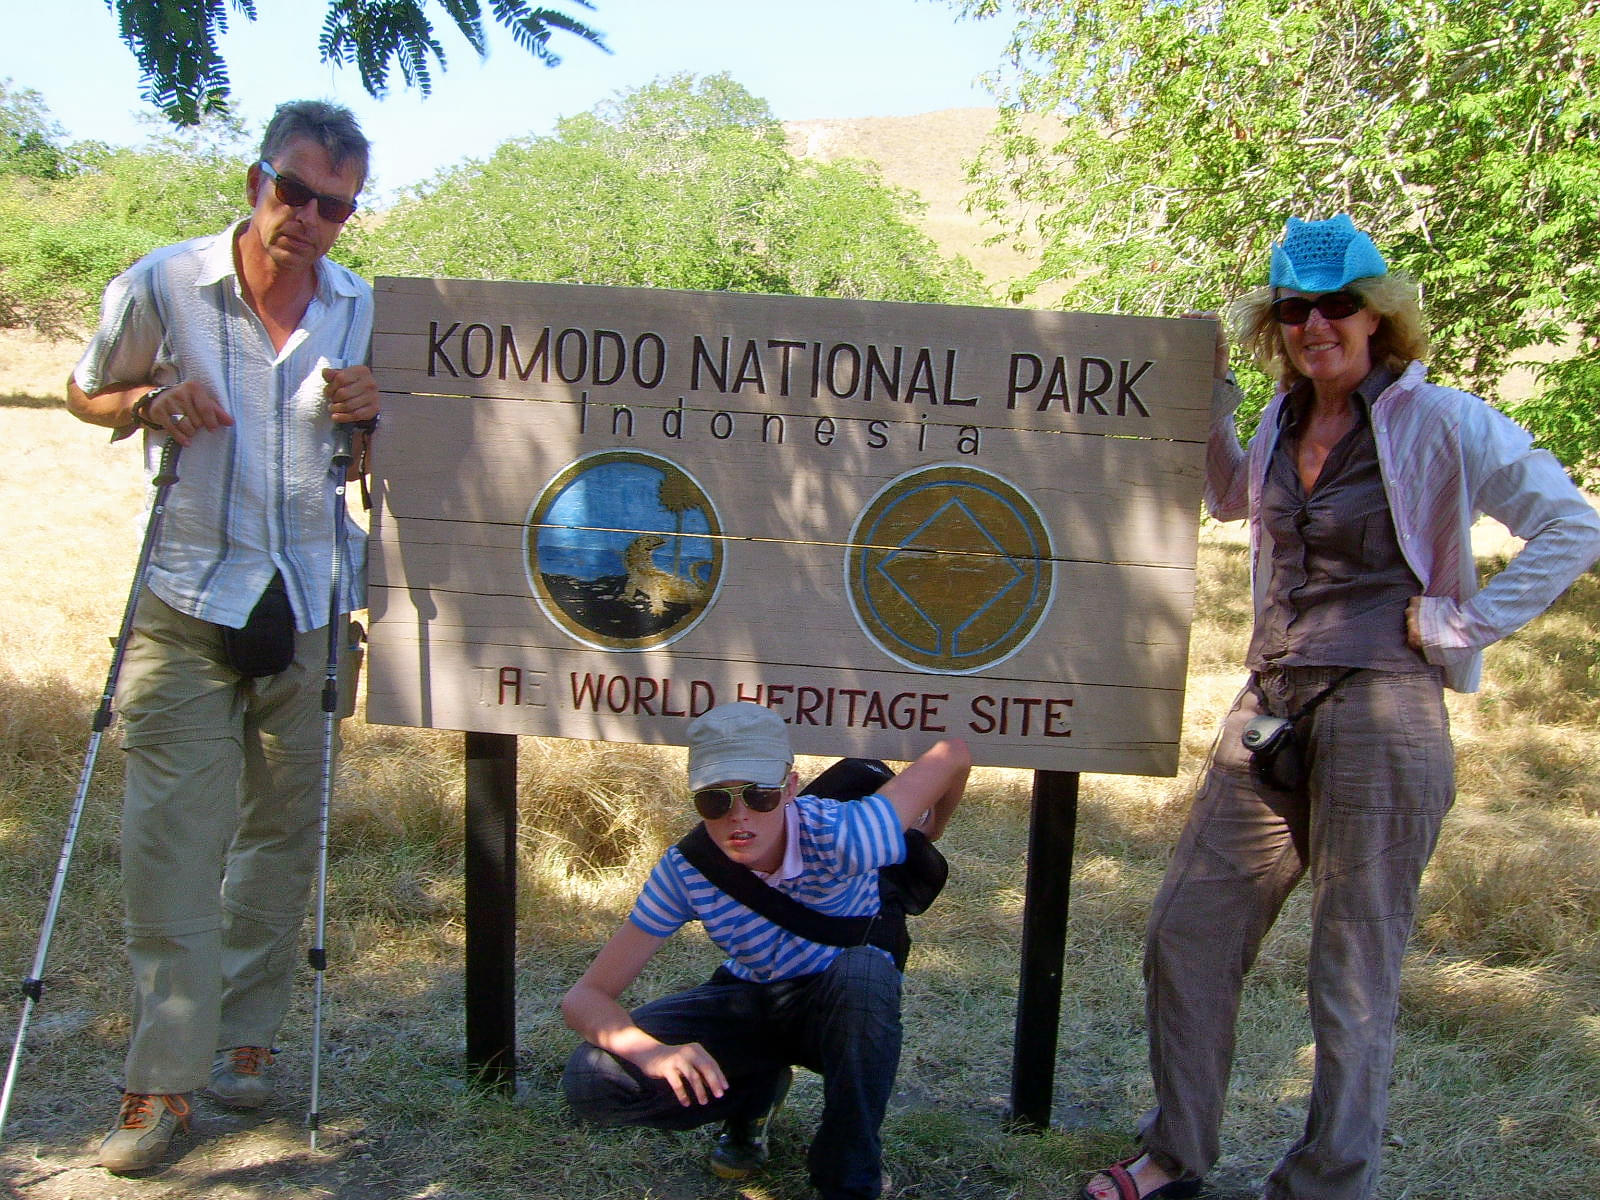 Komodo National Park Overview